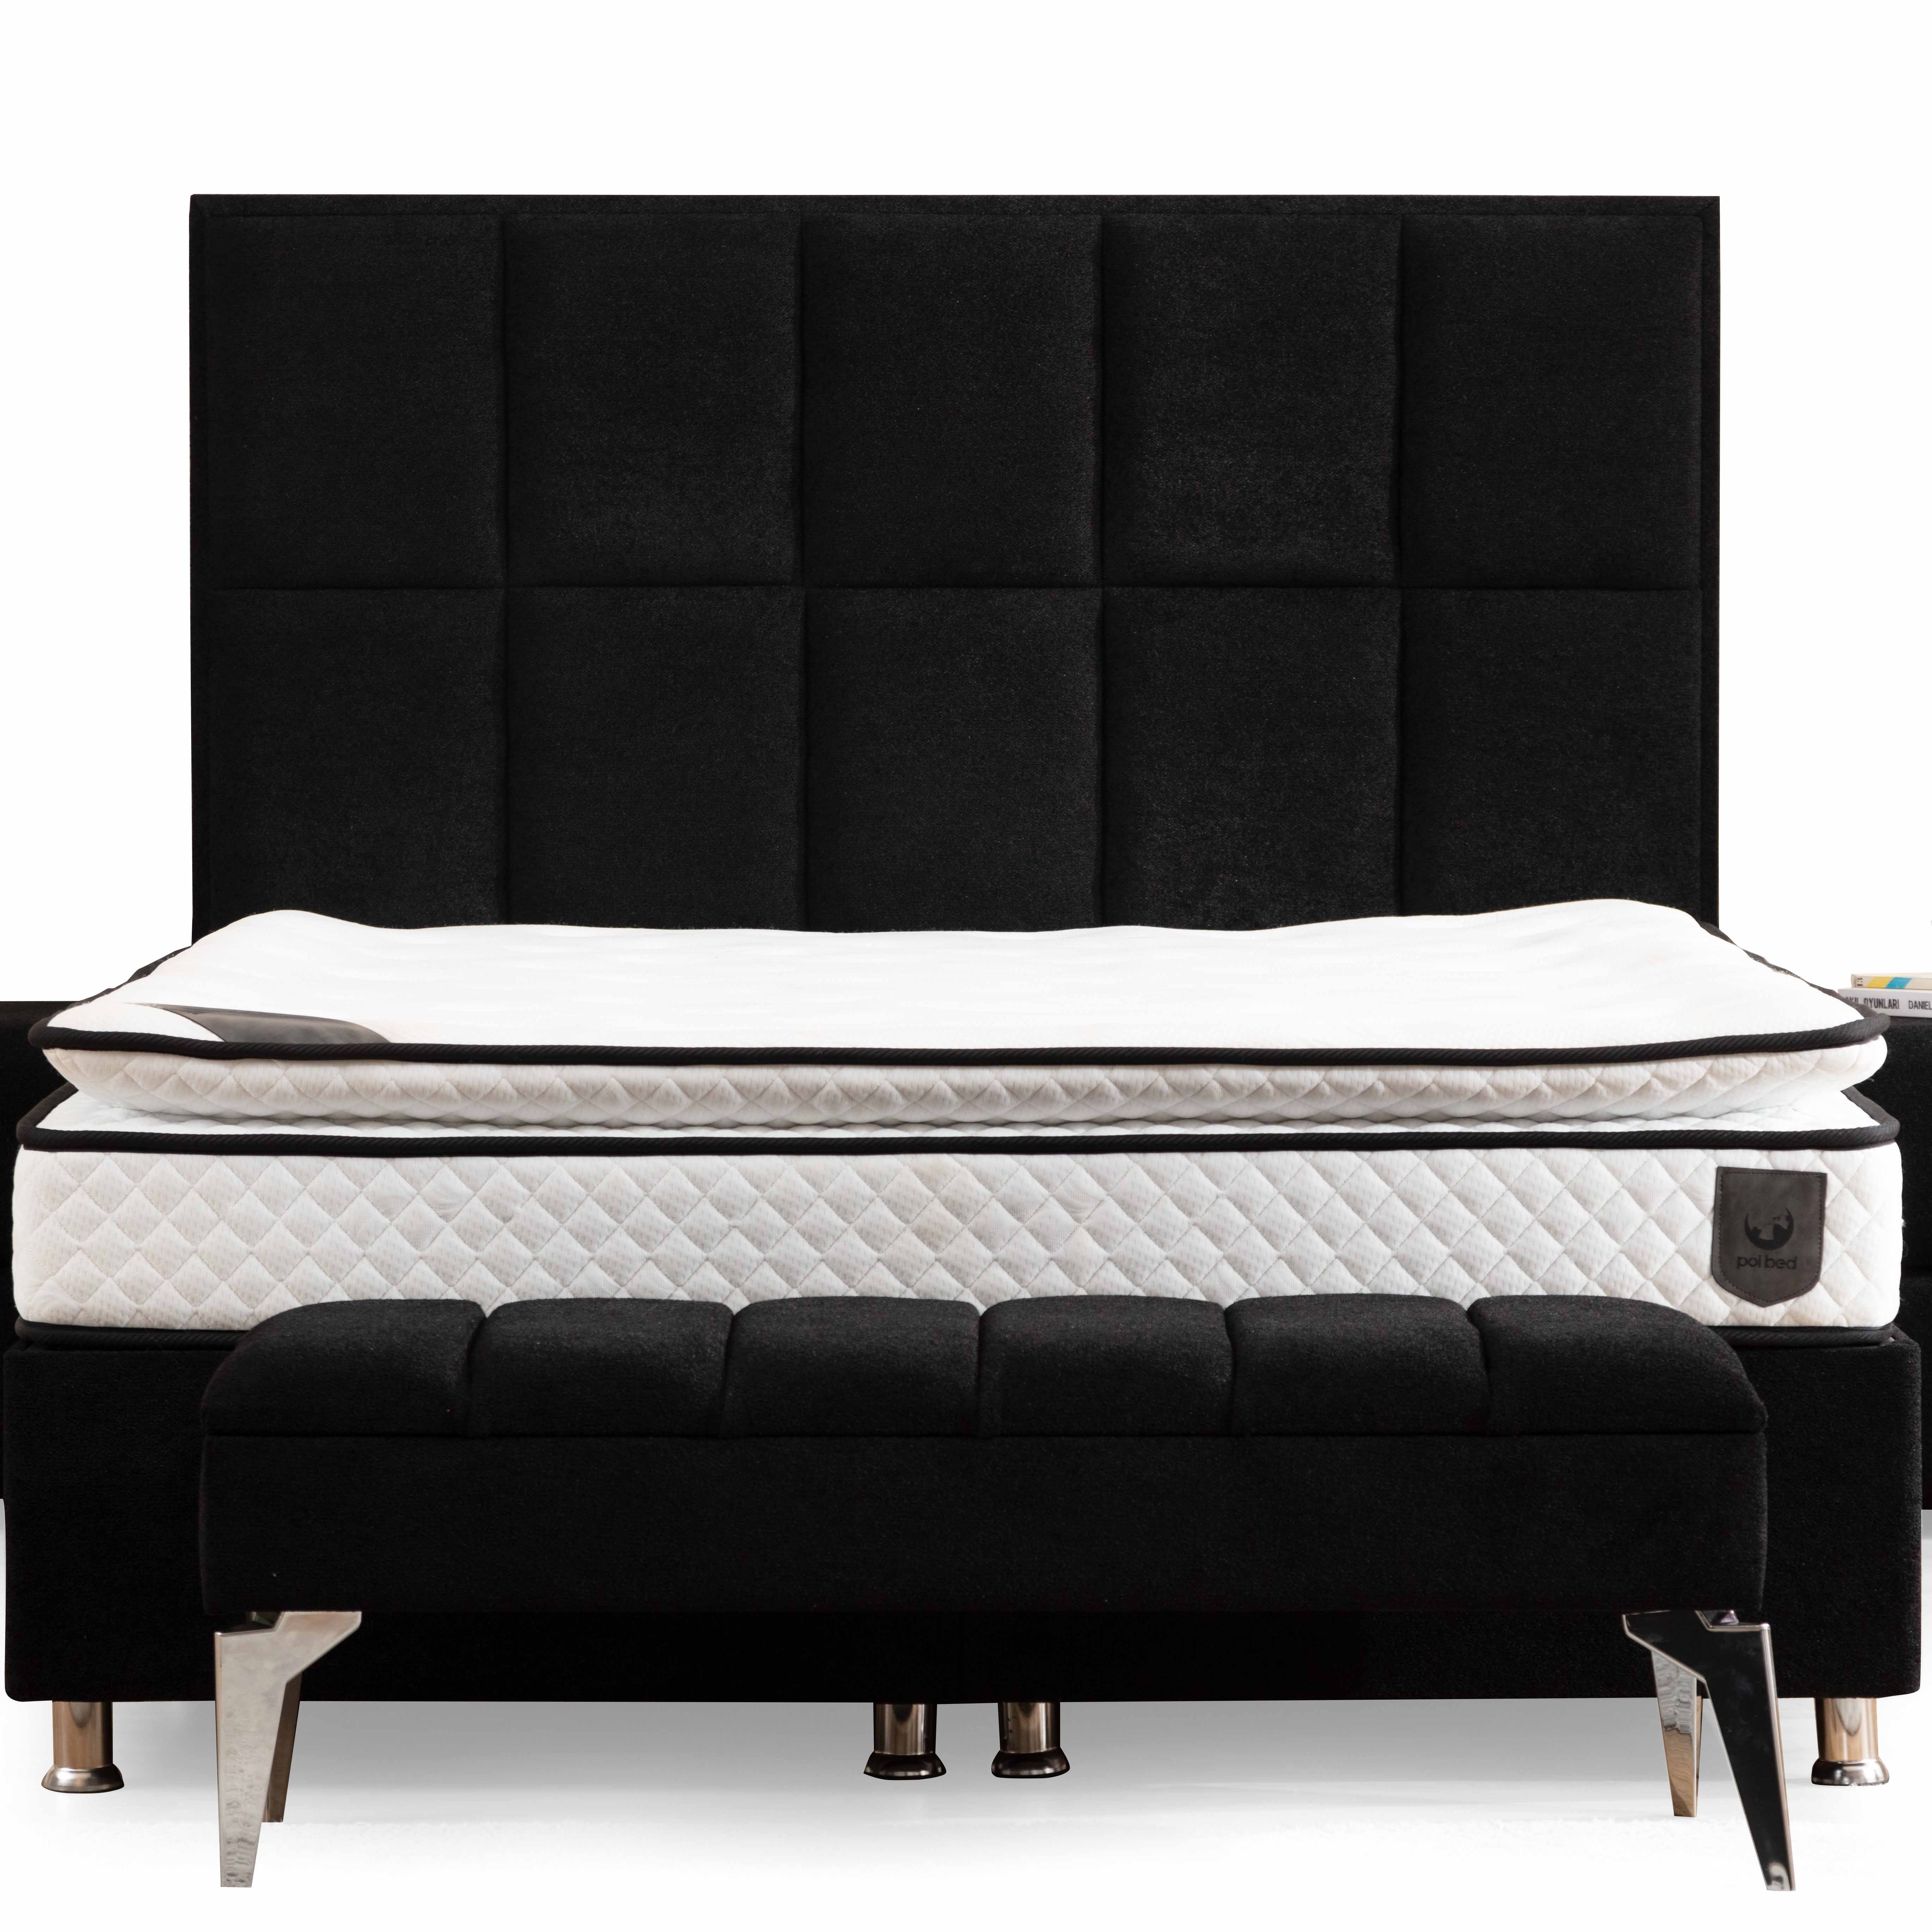 Lovita Bed With Storage 140x190 cm